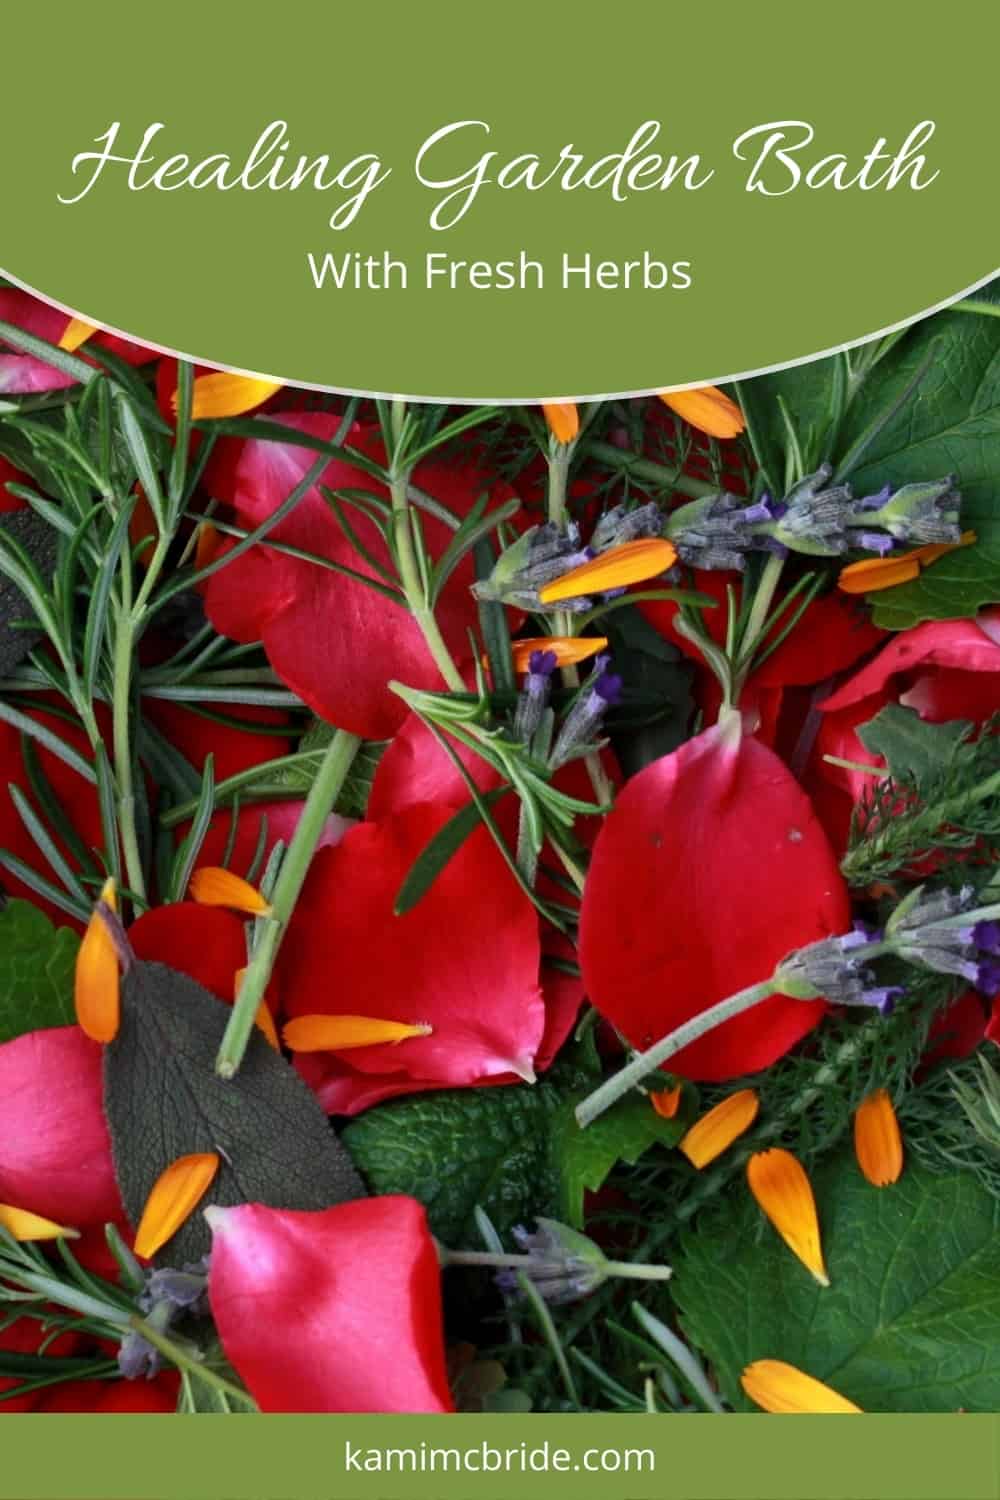 Healing Garden Bath With Fresh Herbs